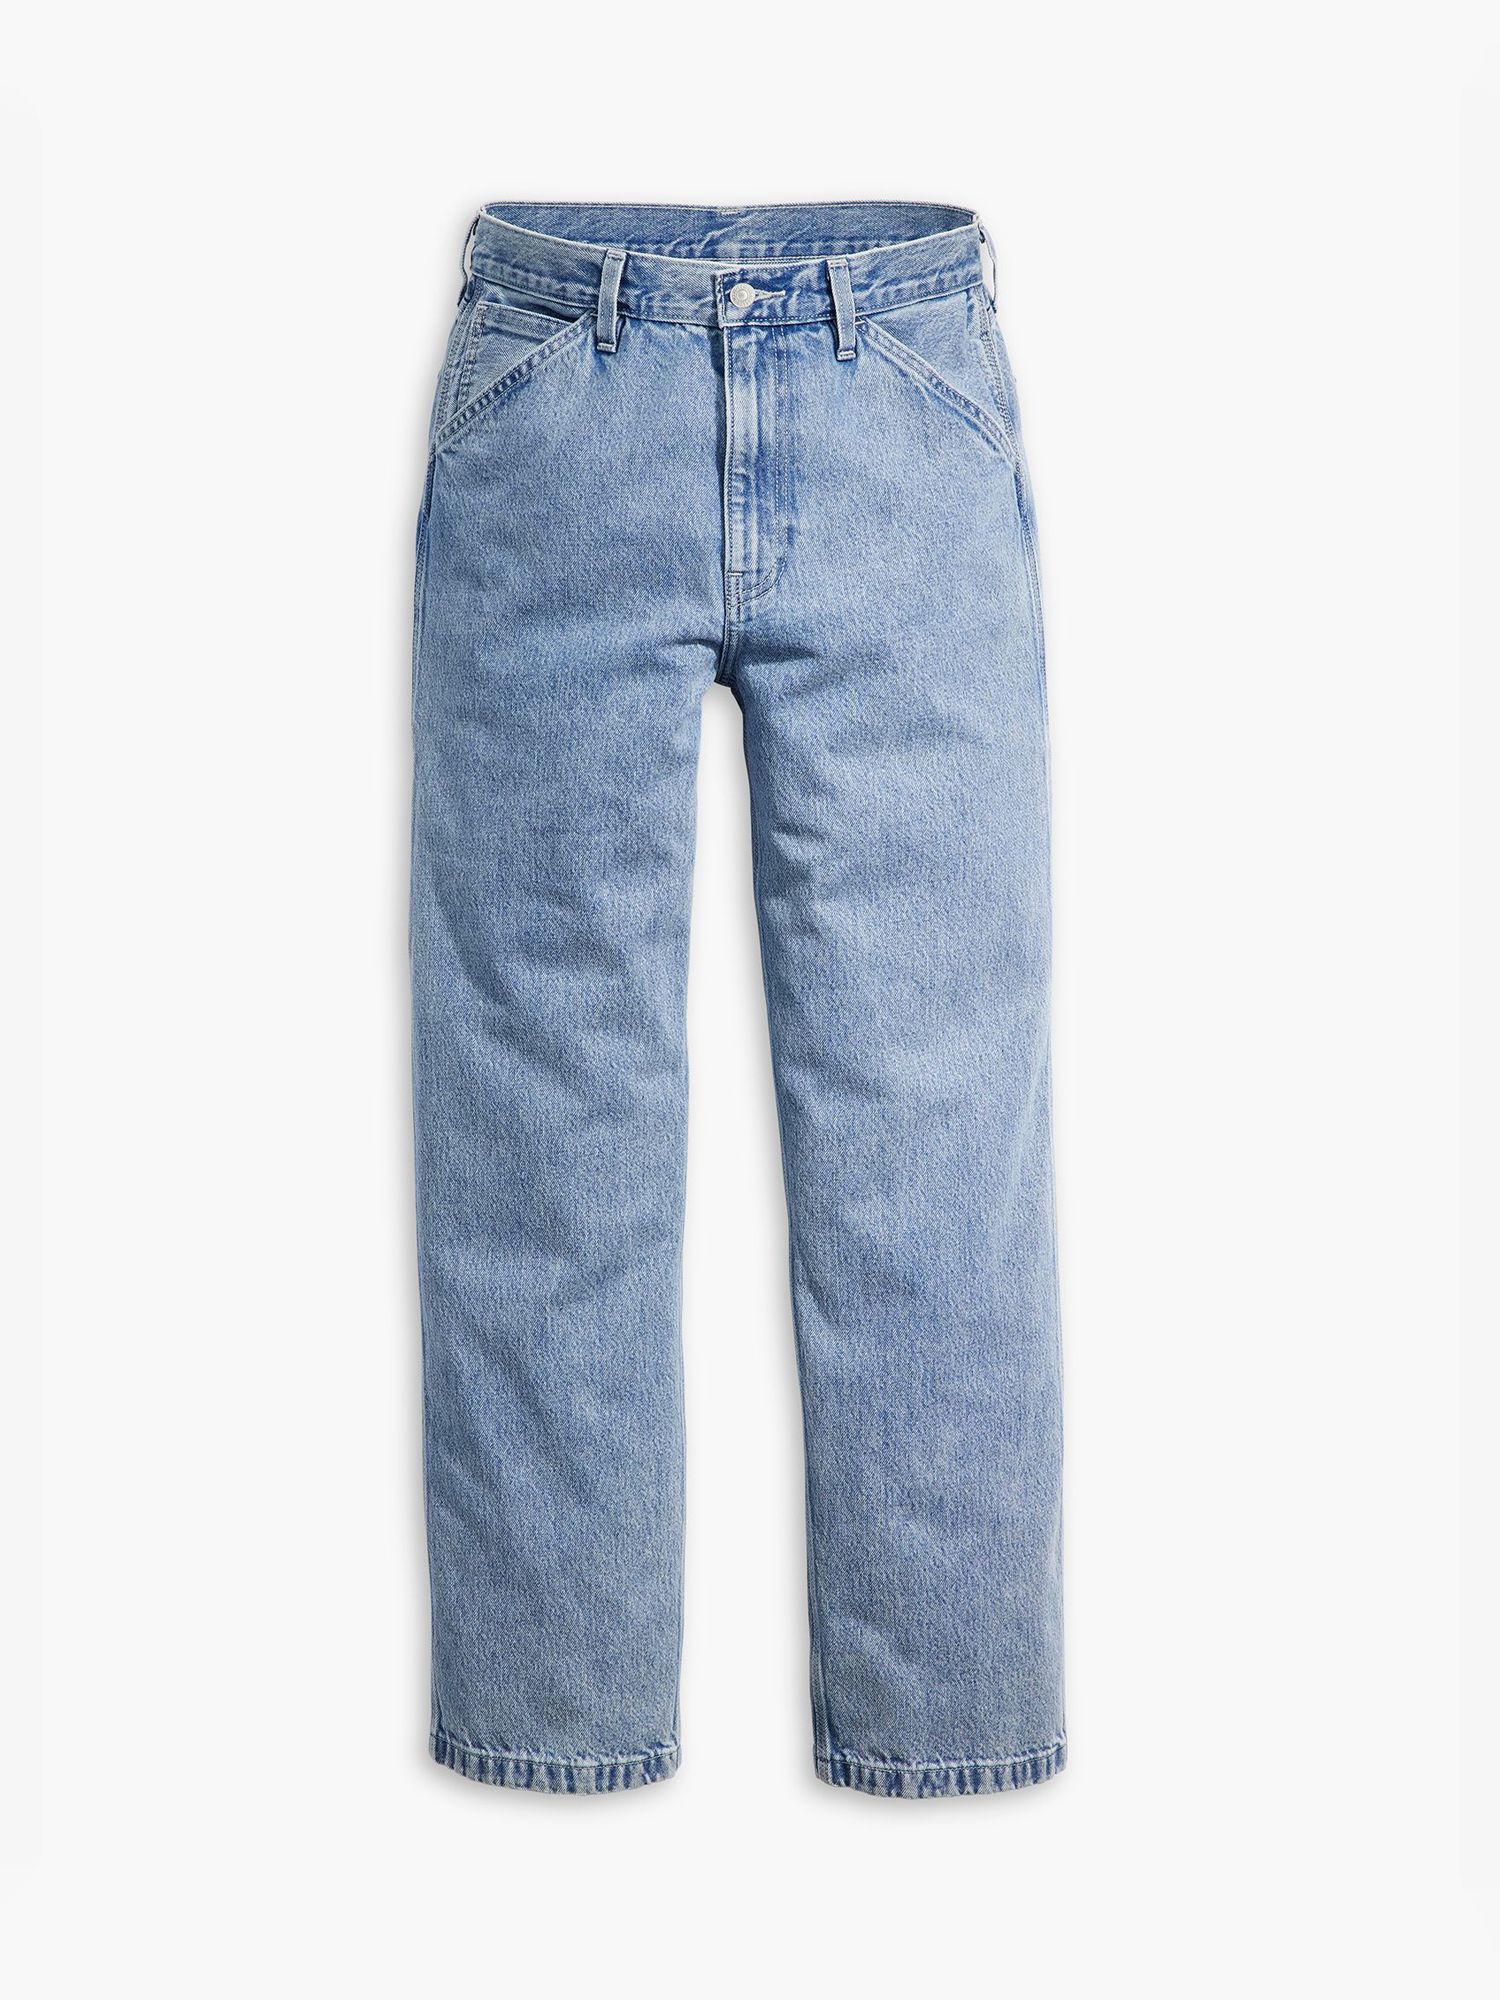 Buy Levi's 568 Loose Carpenter Jeans Online at johnlewis.com